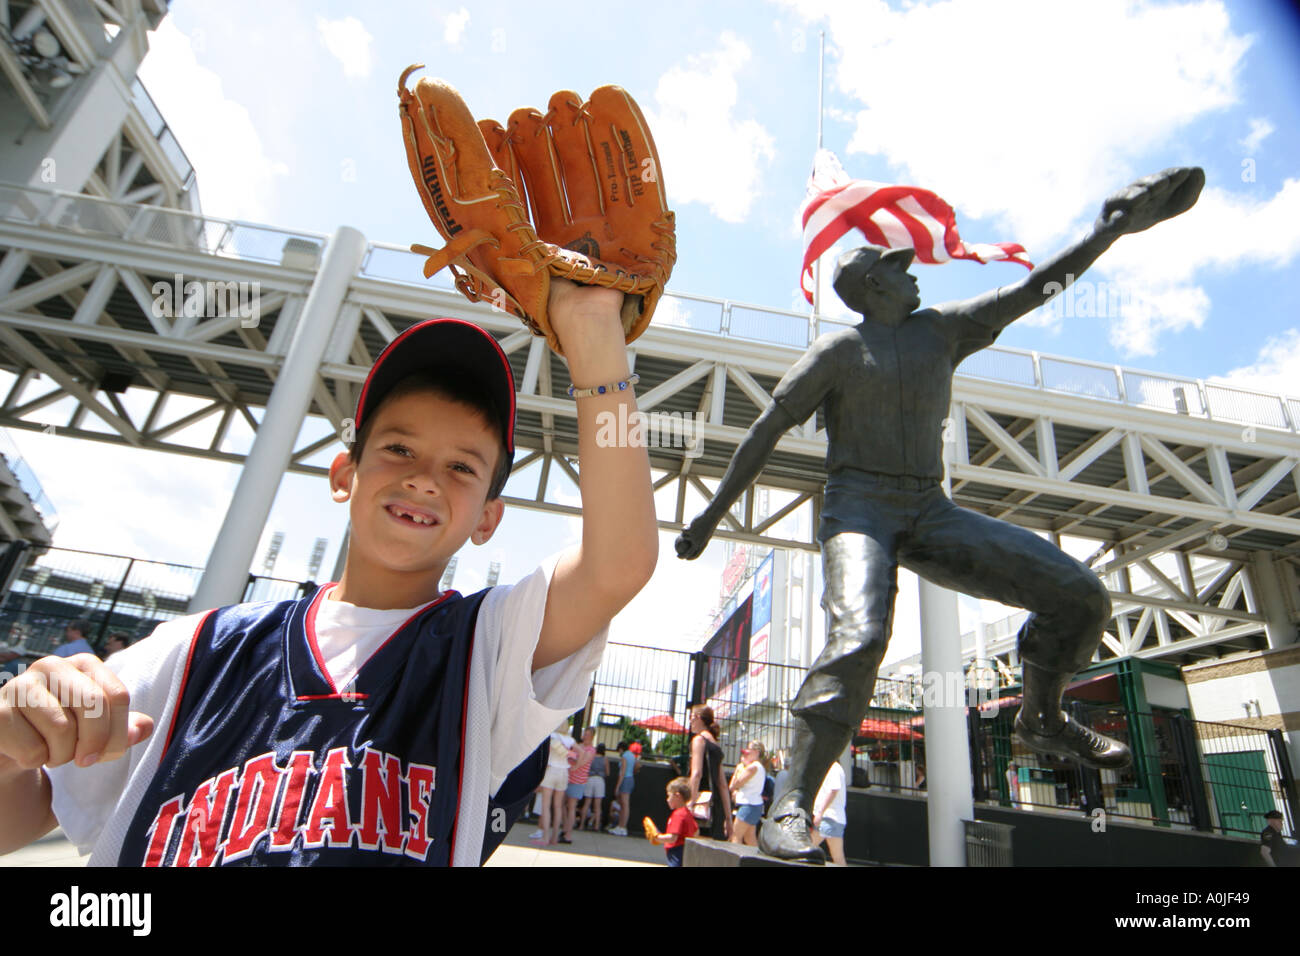 Cleveland Ohio,Jacobs Field,Cleveland Indians baseball,Bob Feller statue,public art,sculpture,young fan,OH0614040023 Stock Photo